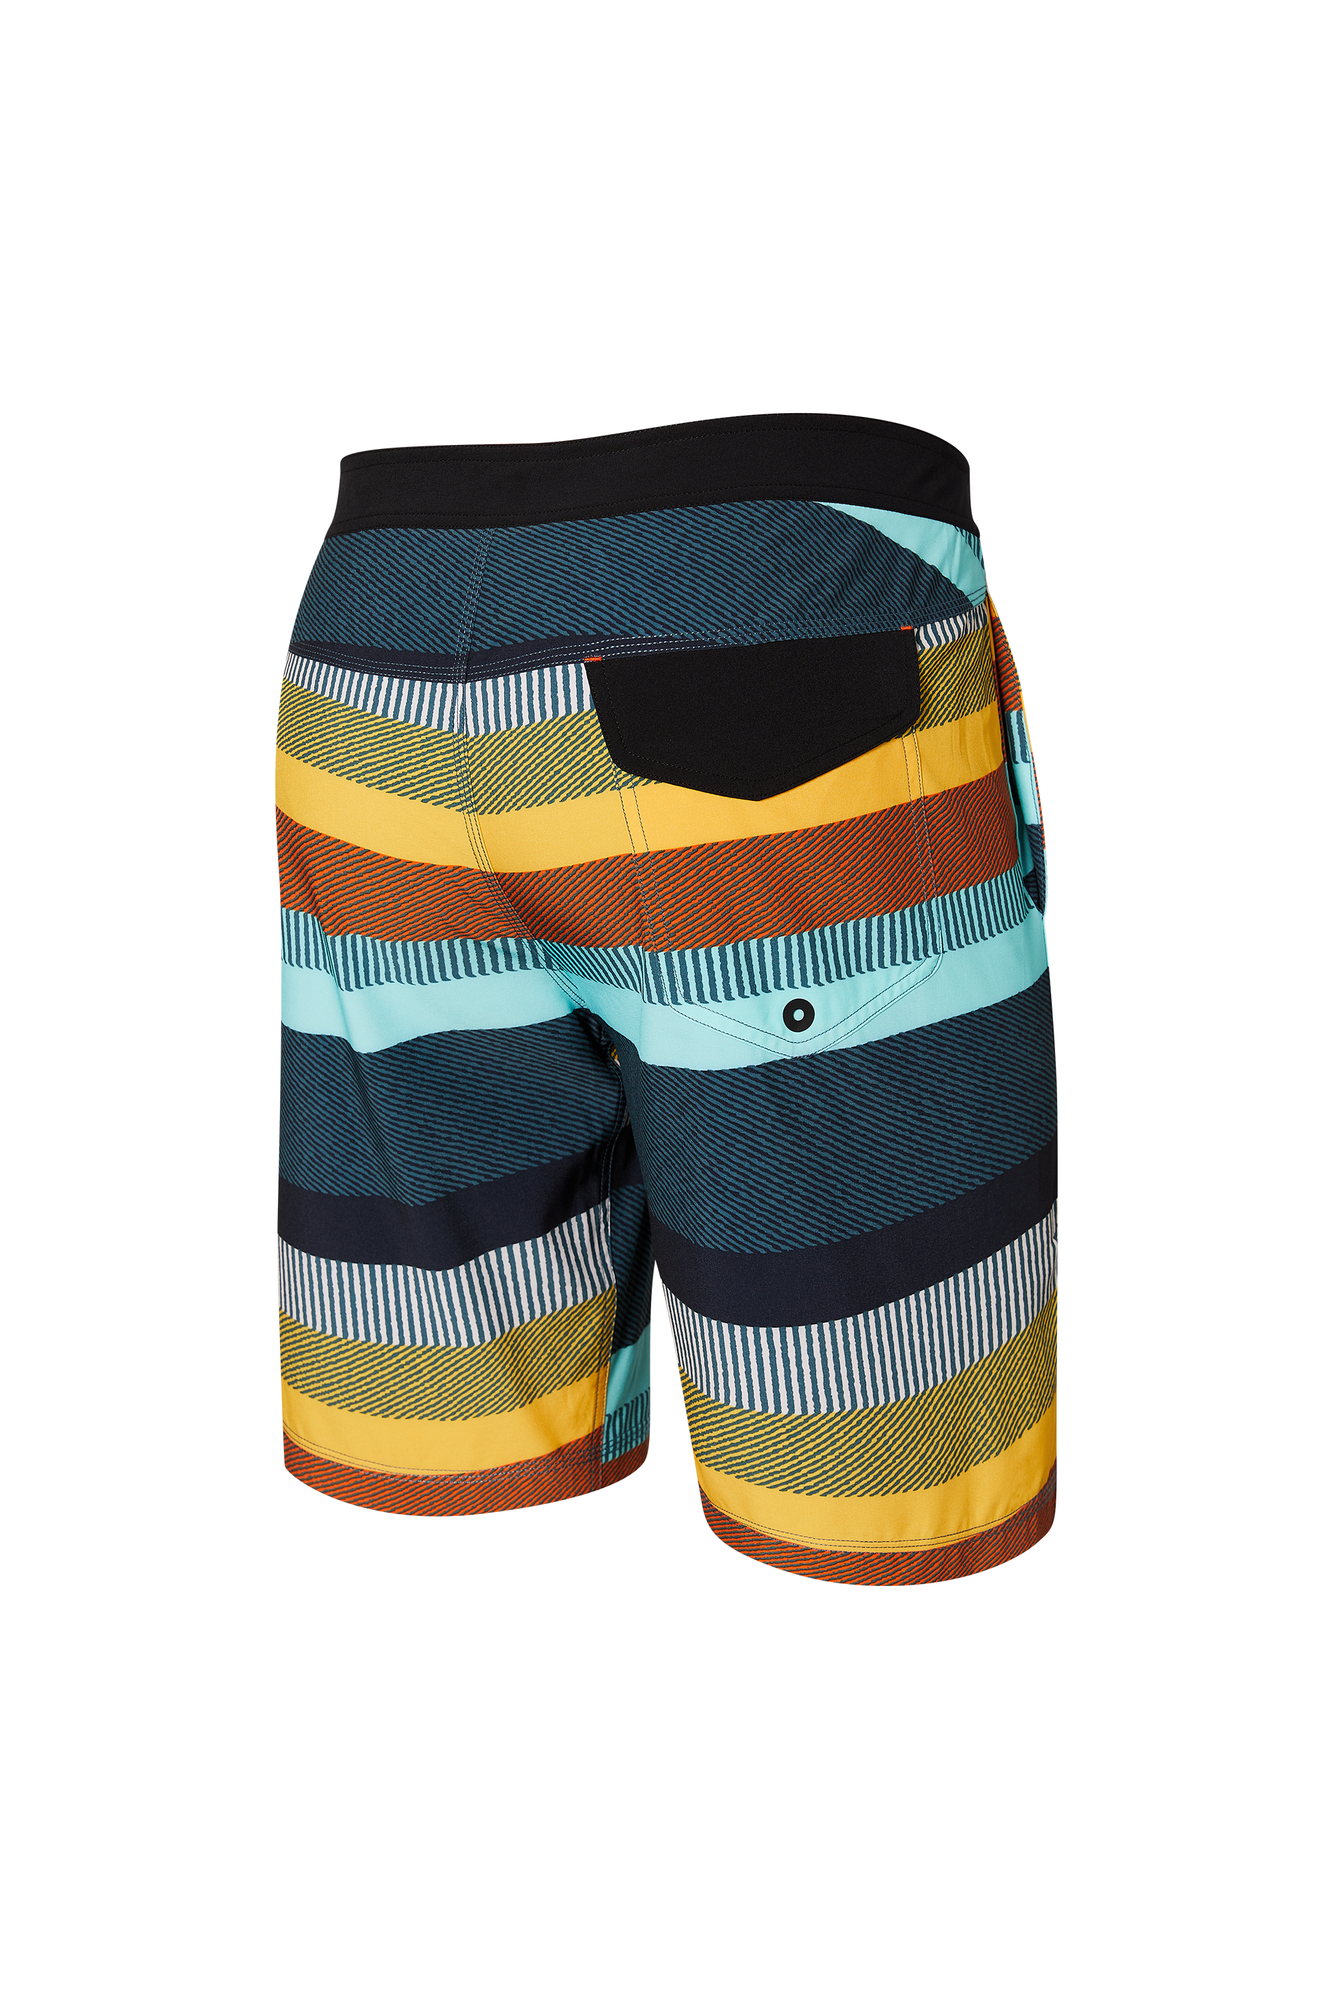 Saxx Betawave Boardie Men's Swim Shorts - Style SXSW02L, back